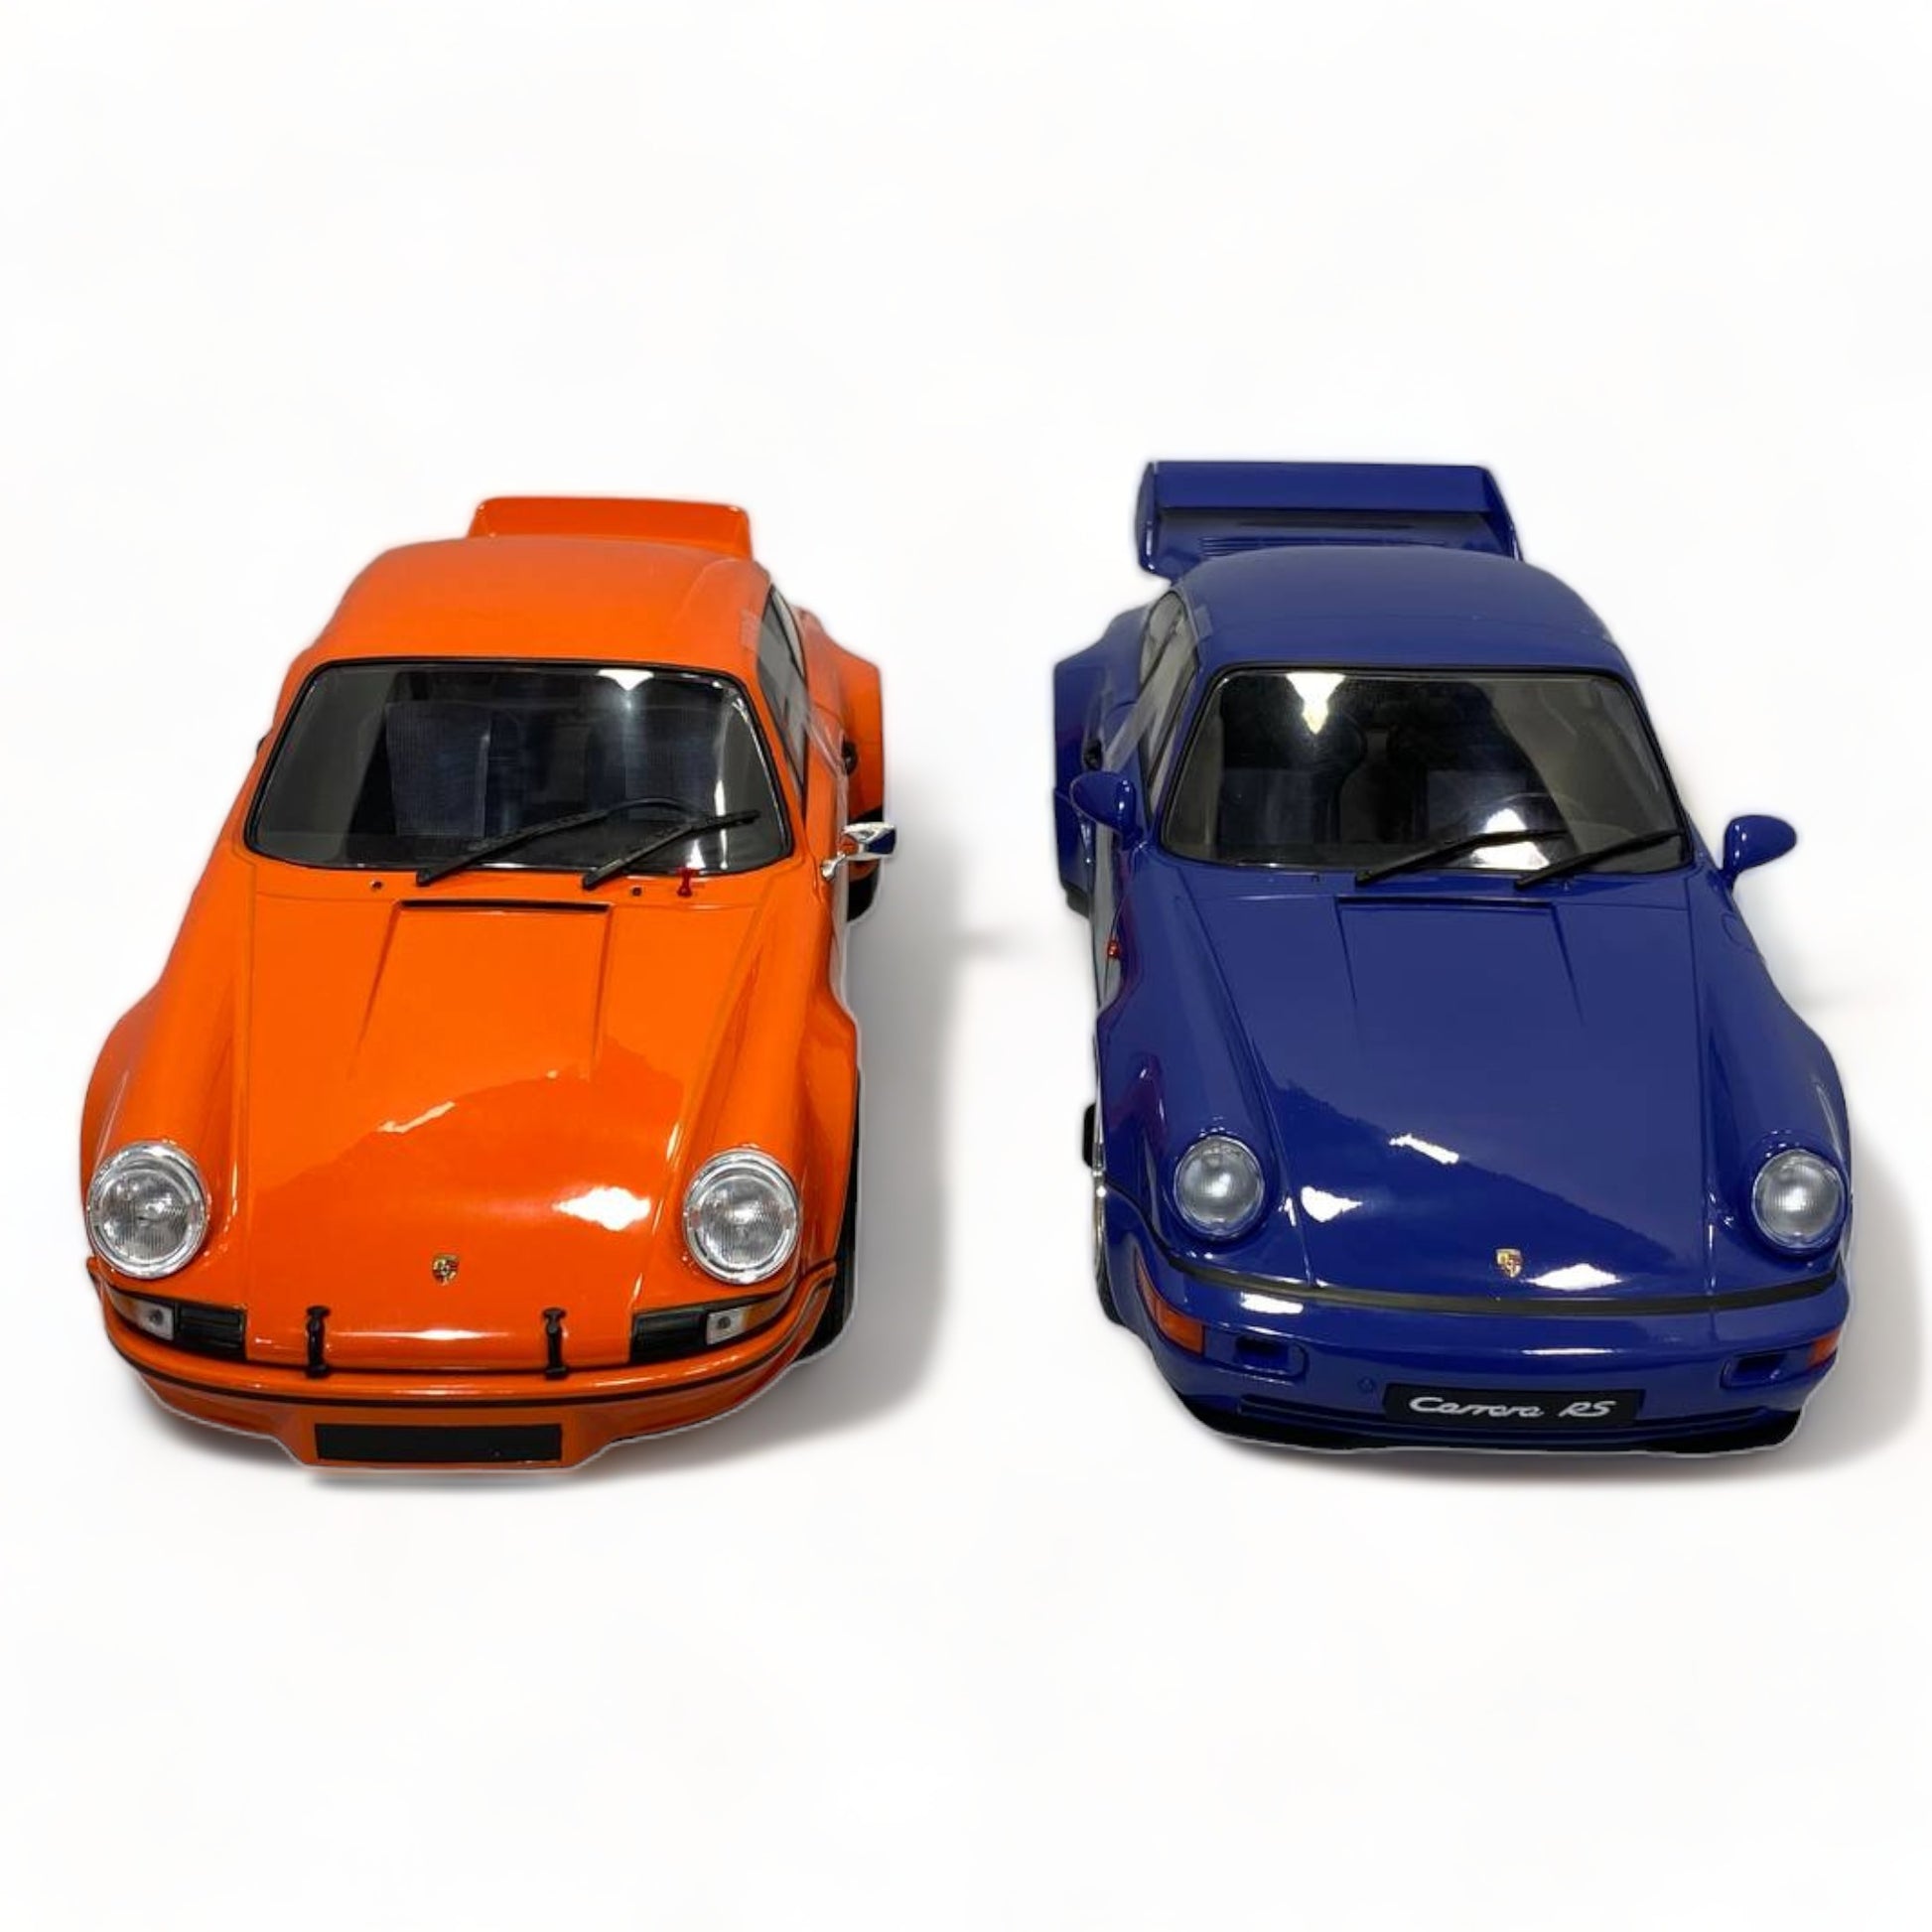 1/18 Solido Porsche 911 RSR ORANGE & 964 RS BLUE PACK ORANGE & BLUE Model Car|Sold in Dturman.com Dubai UAE.